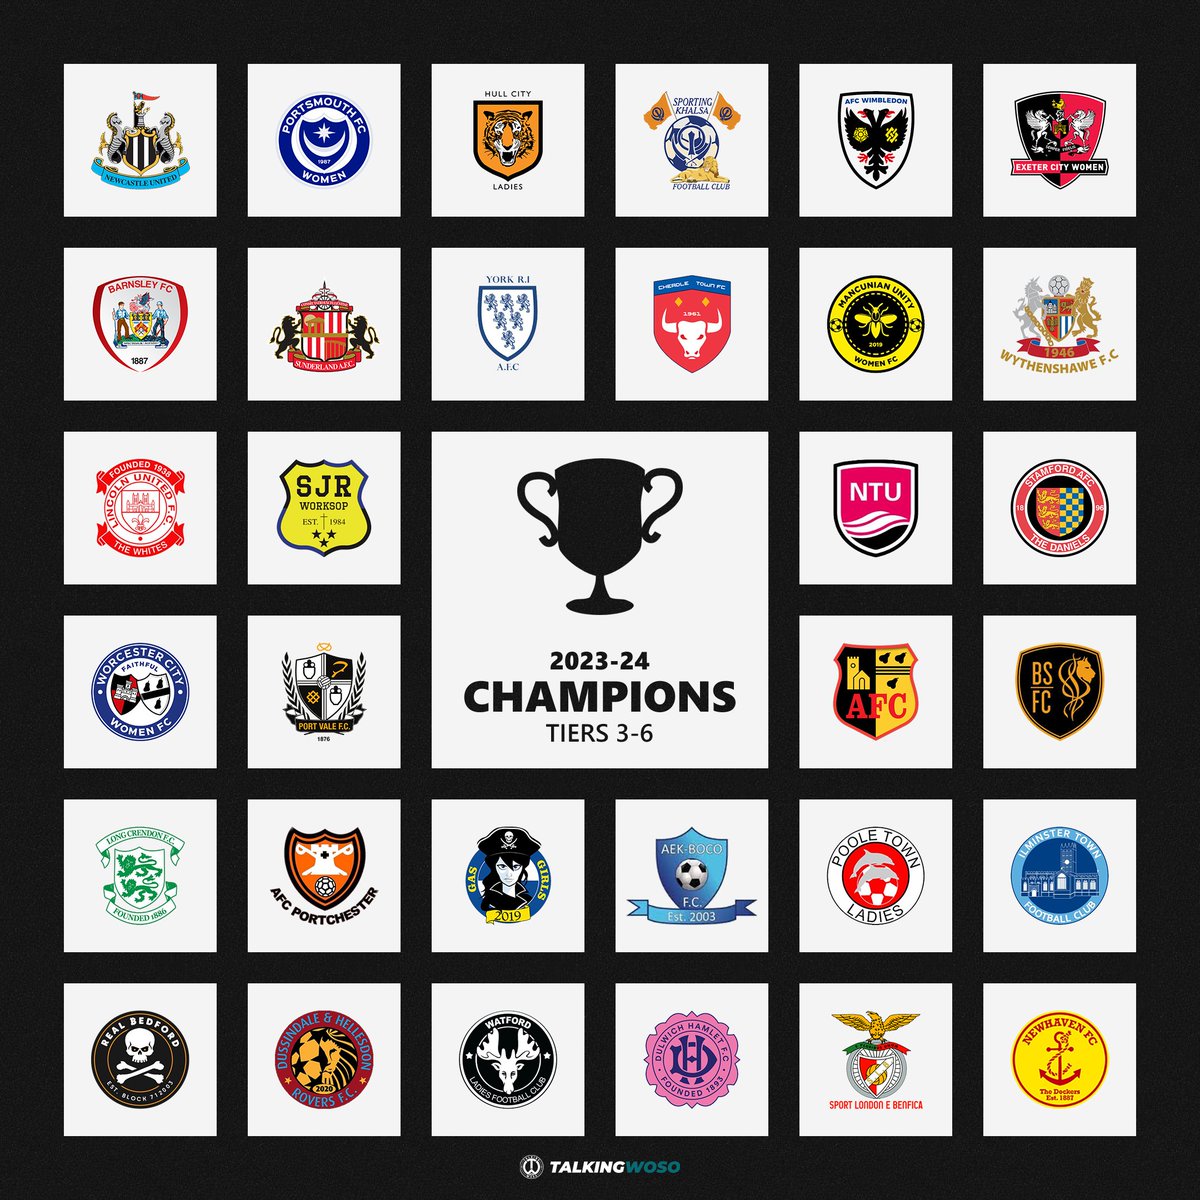 Champione, Champione, Olé, Olé, Olé! The 2023-24 league champions across Tiers 3-6. 🏆